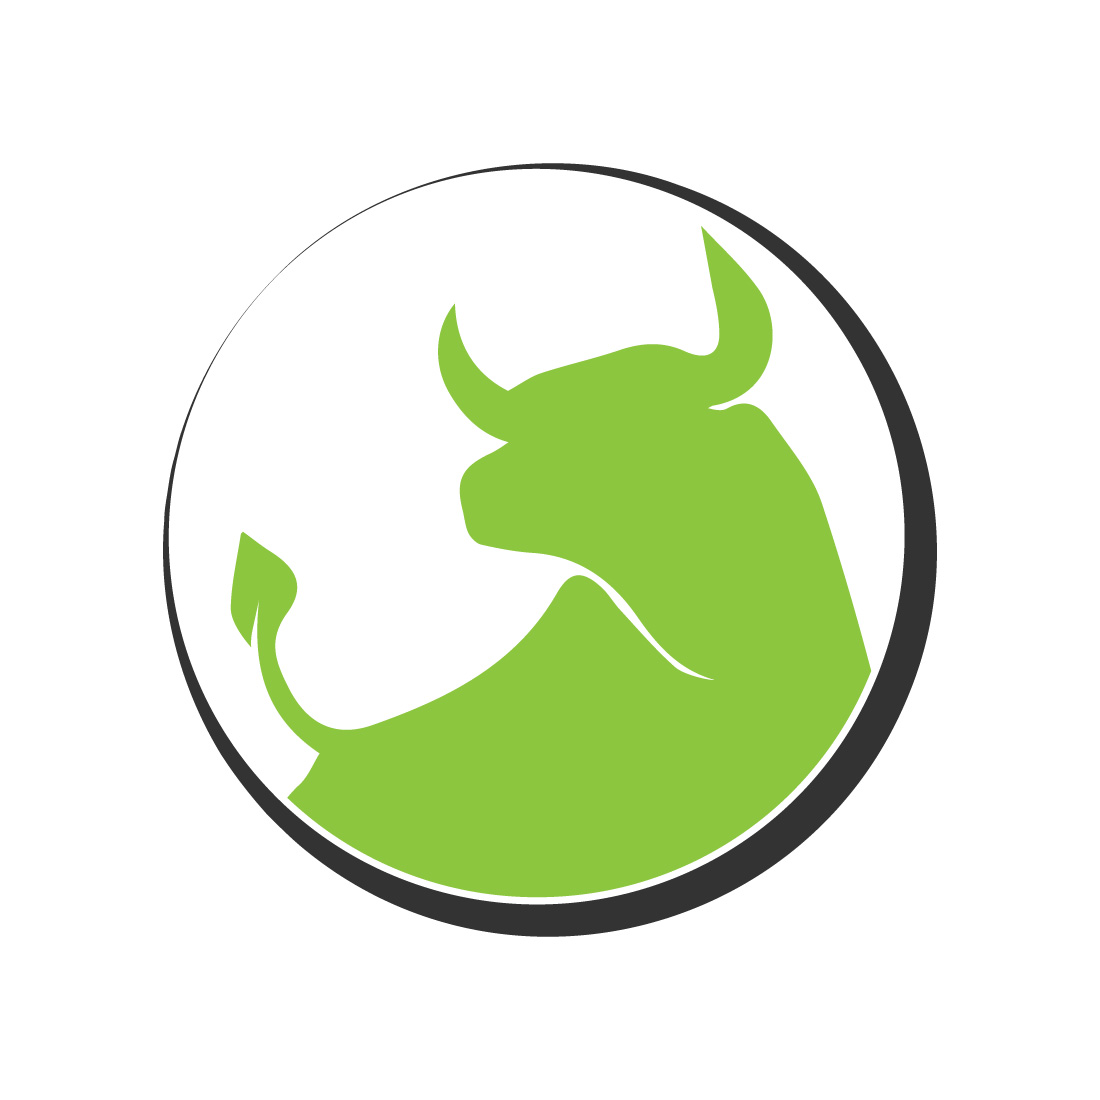 Bull Head logo design preview image.